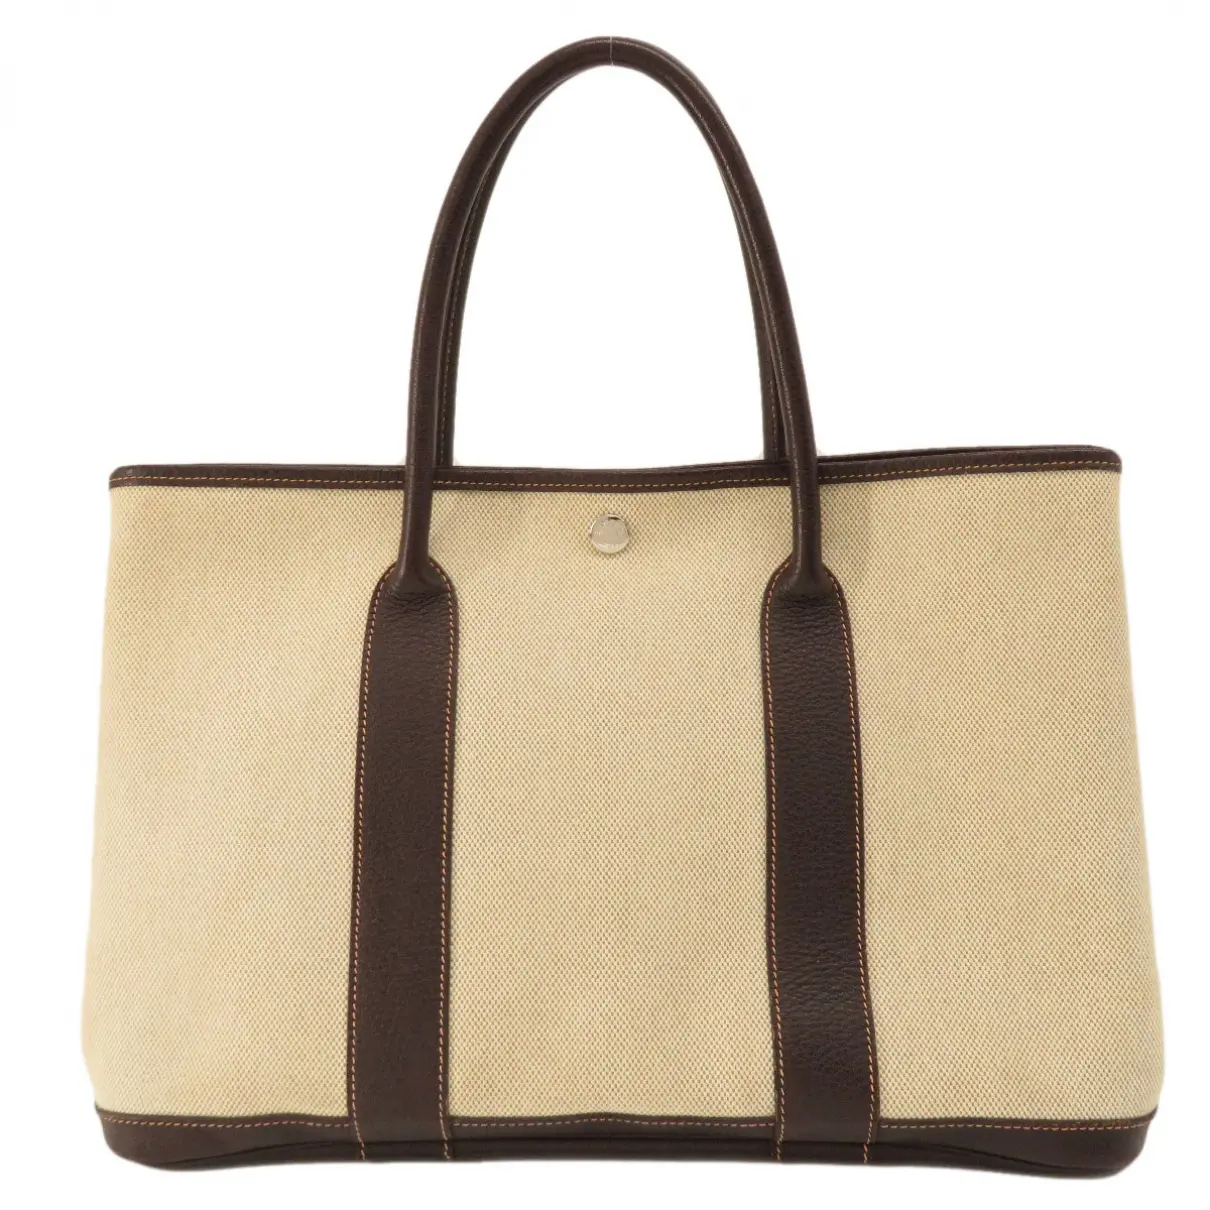 Buy Hermès Garden Party leather handbag online